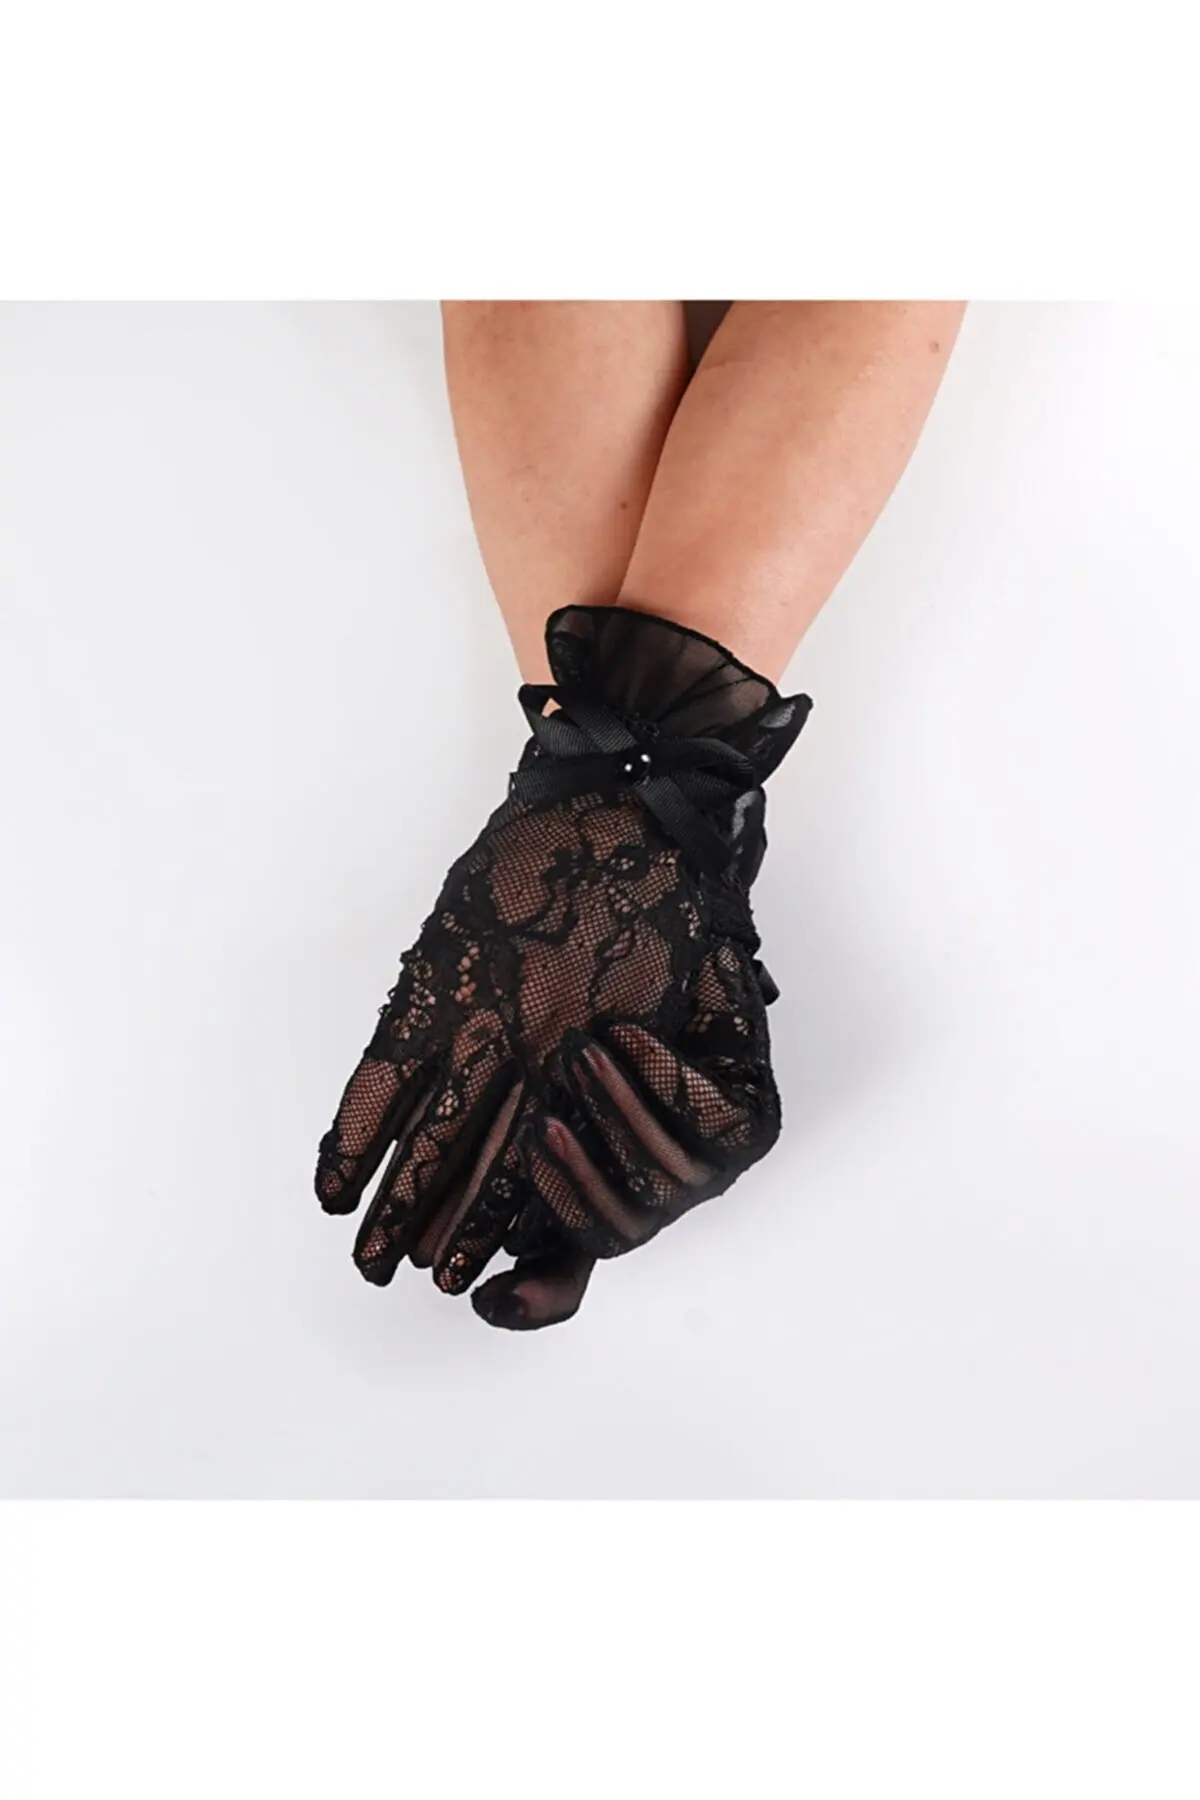 

Black Lace Ruffle Bridal Gloves Lace Mesh Bridal Transparent Elegant Fishnet Silk Tulle Guipure